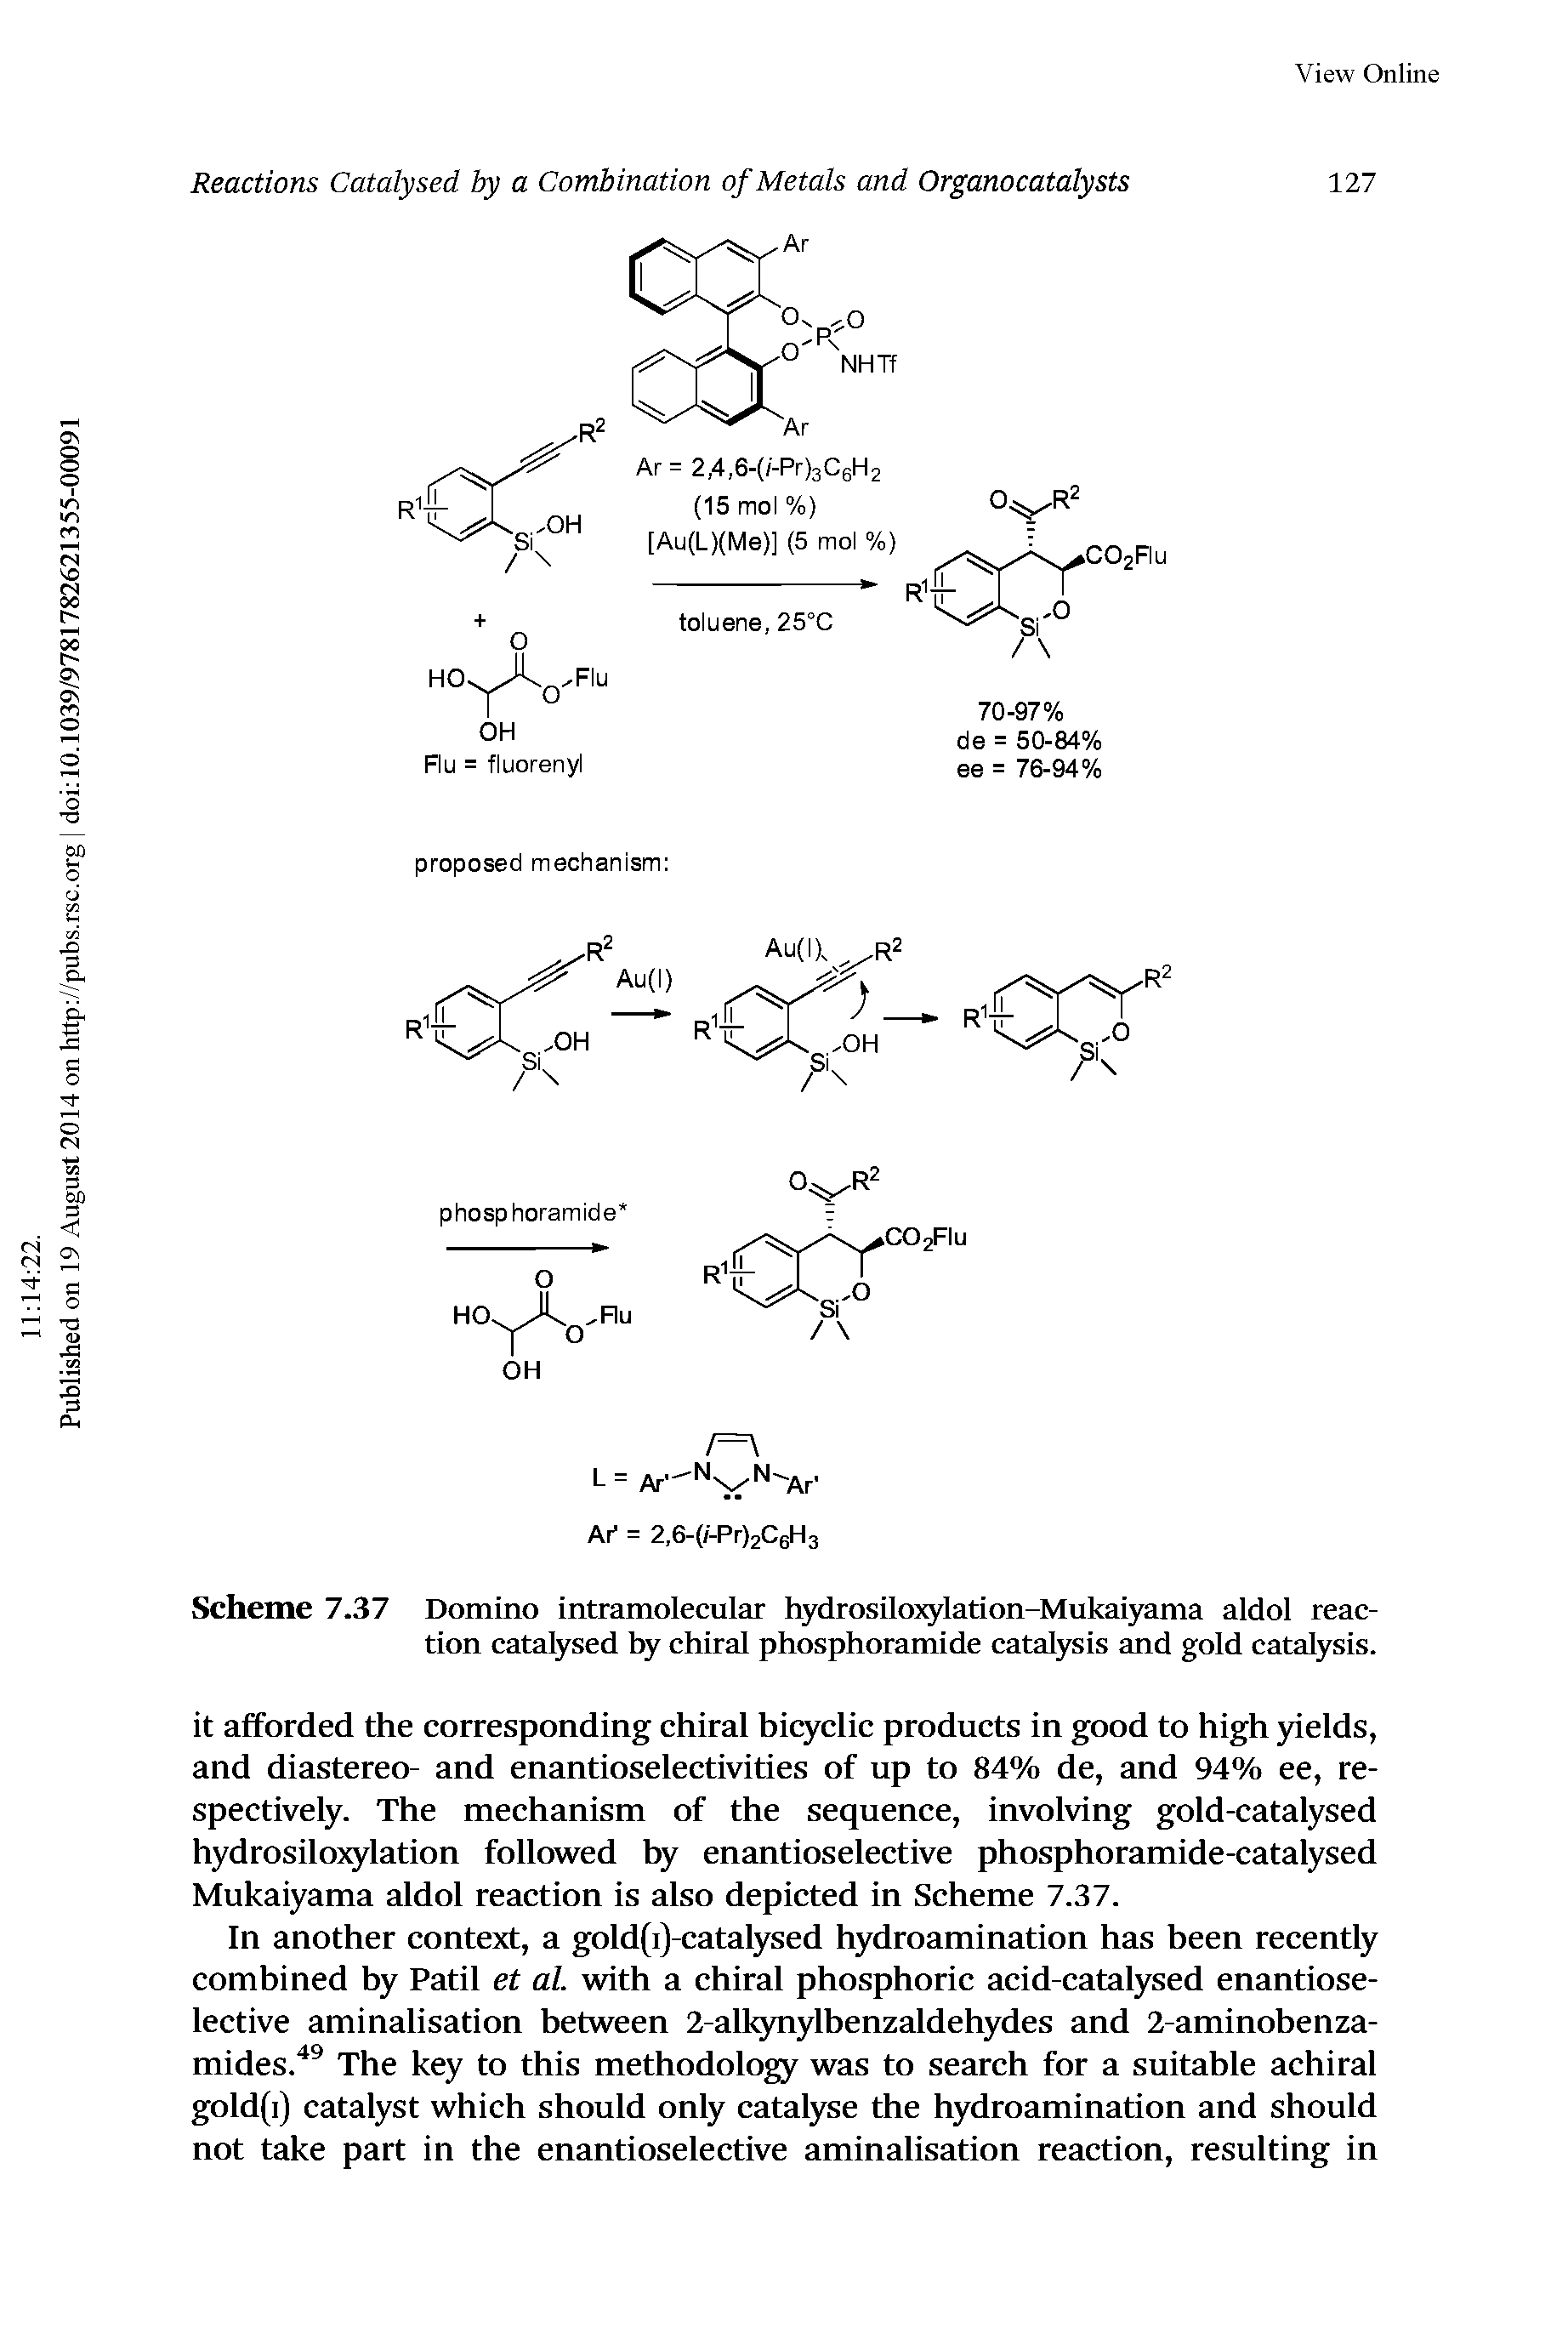 Scheme 7.37 Domino intramolecular hydrosilojgrlation-Mukaiyama aldol reaction catalysed by chiral phosphoramide catalysis and gold catalysis.